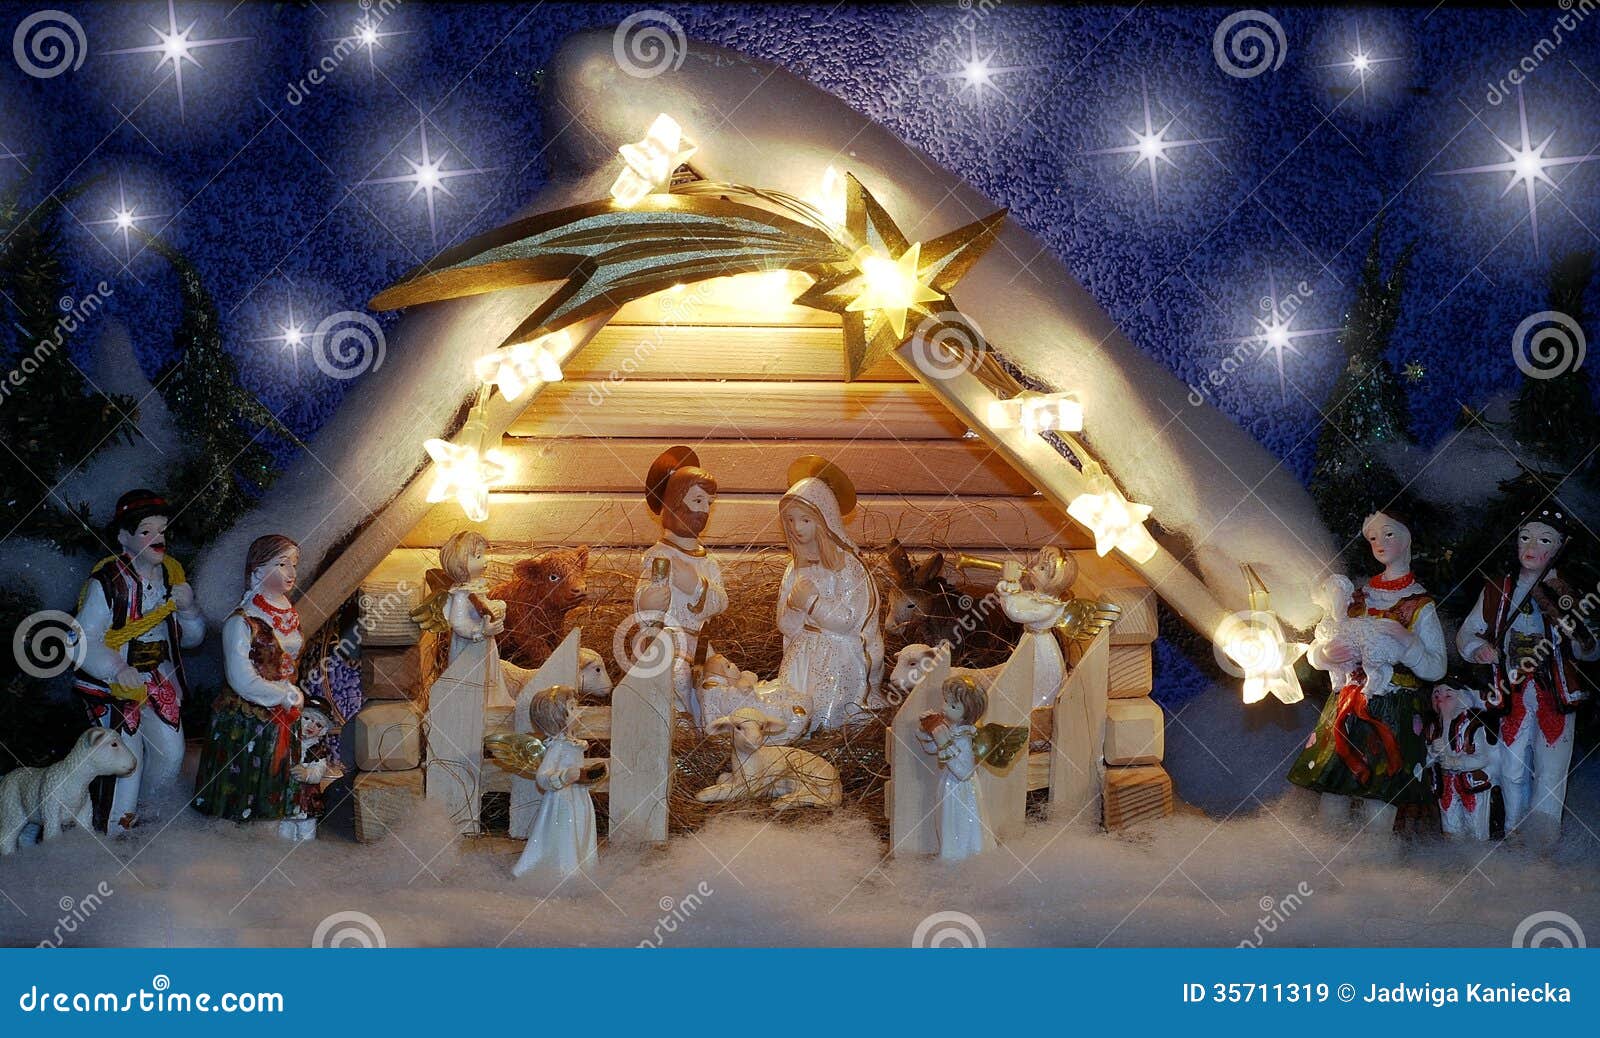 Christmas Crib Royalty Free Stock Images - Image: 35711319